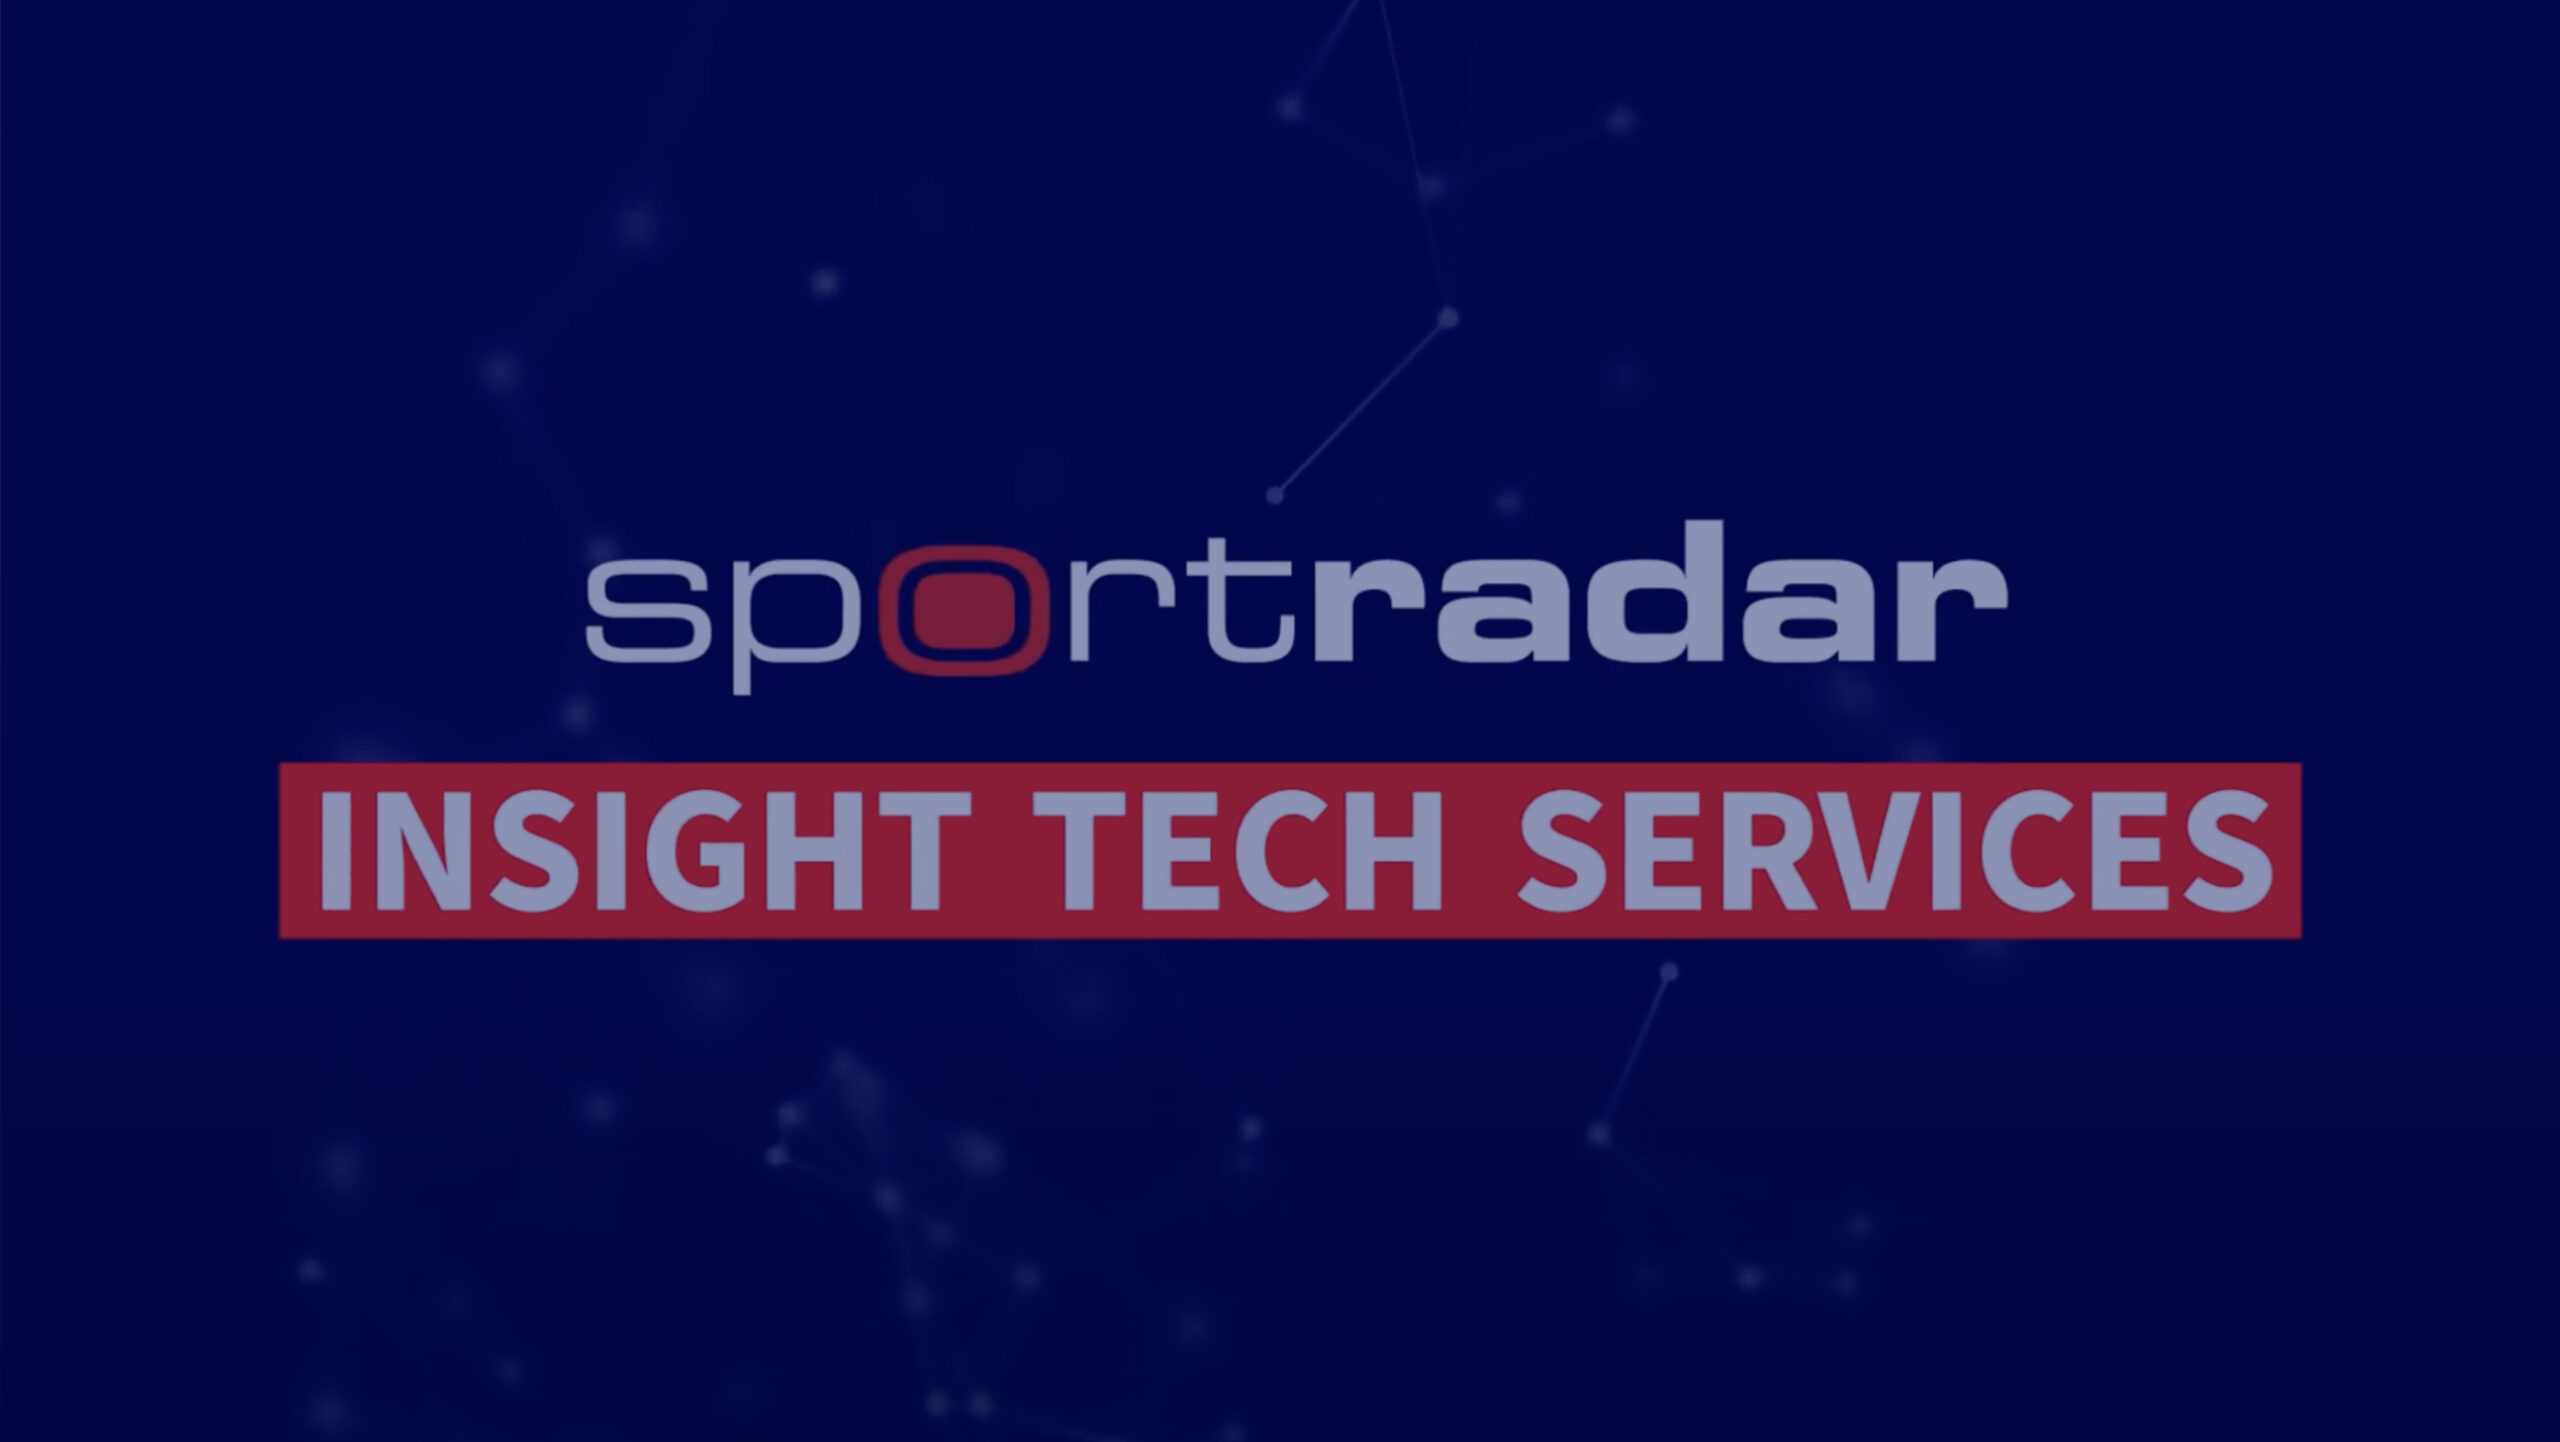 Sportradar- Insight Tech Services